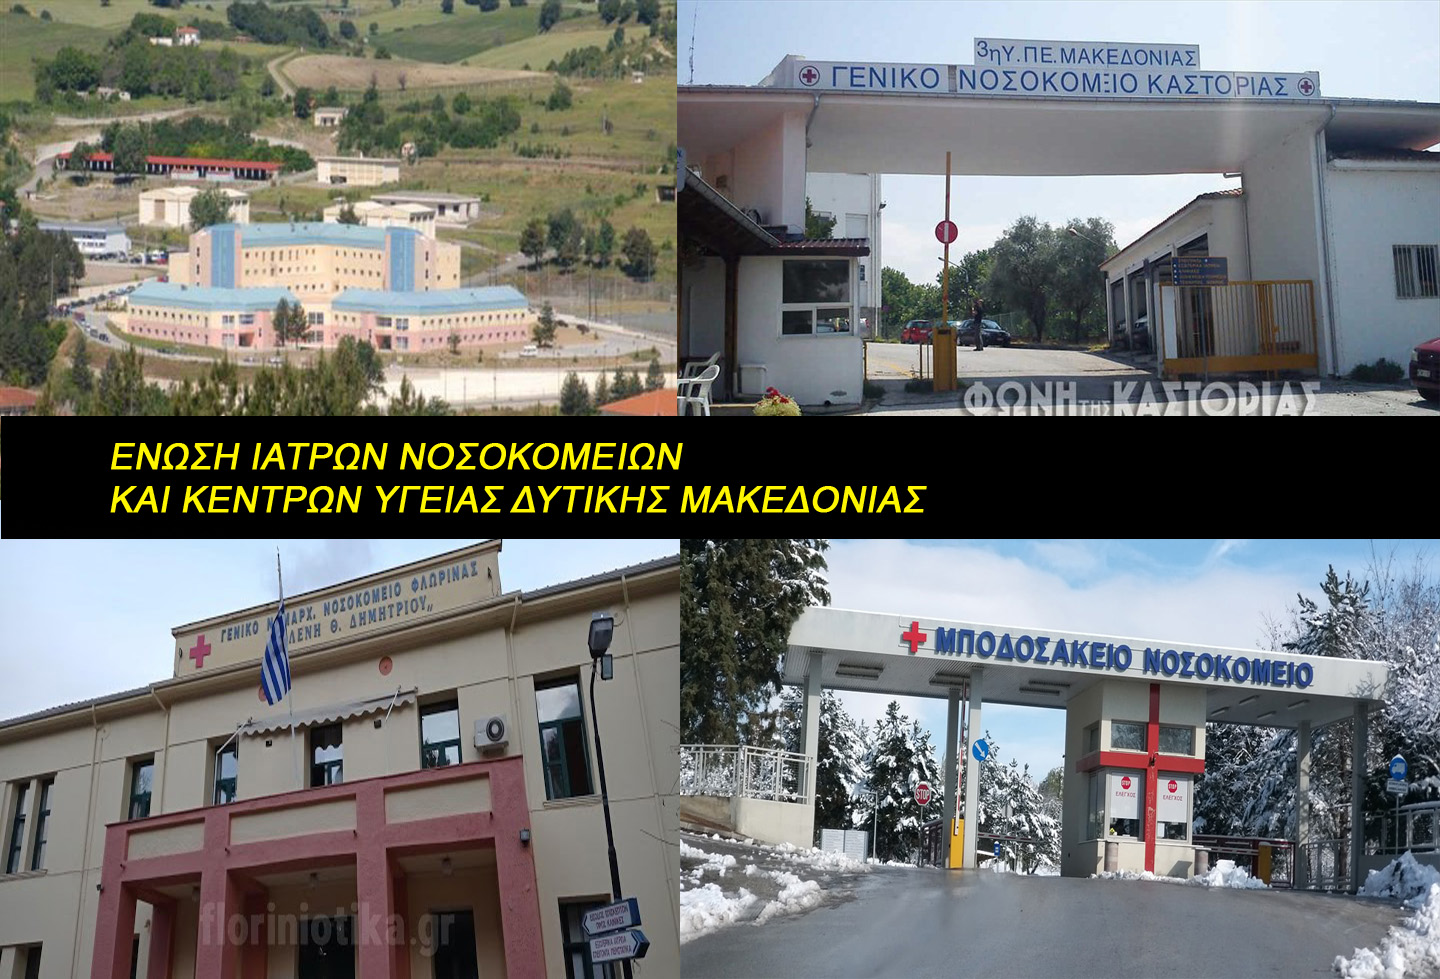 Ptolemai-post: Μην πυροβολείτε του Ιατρούς στη Δυτική Μακεδονία!